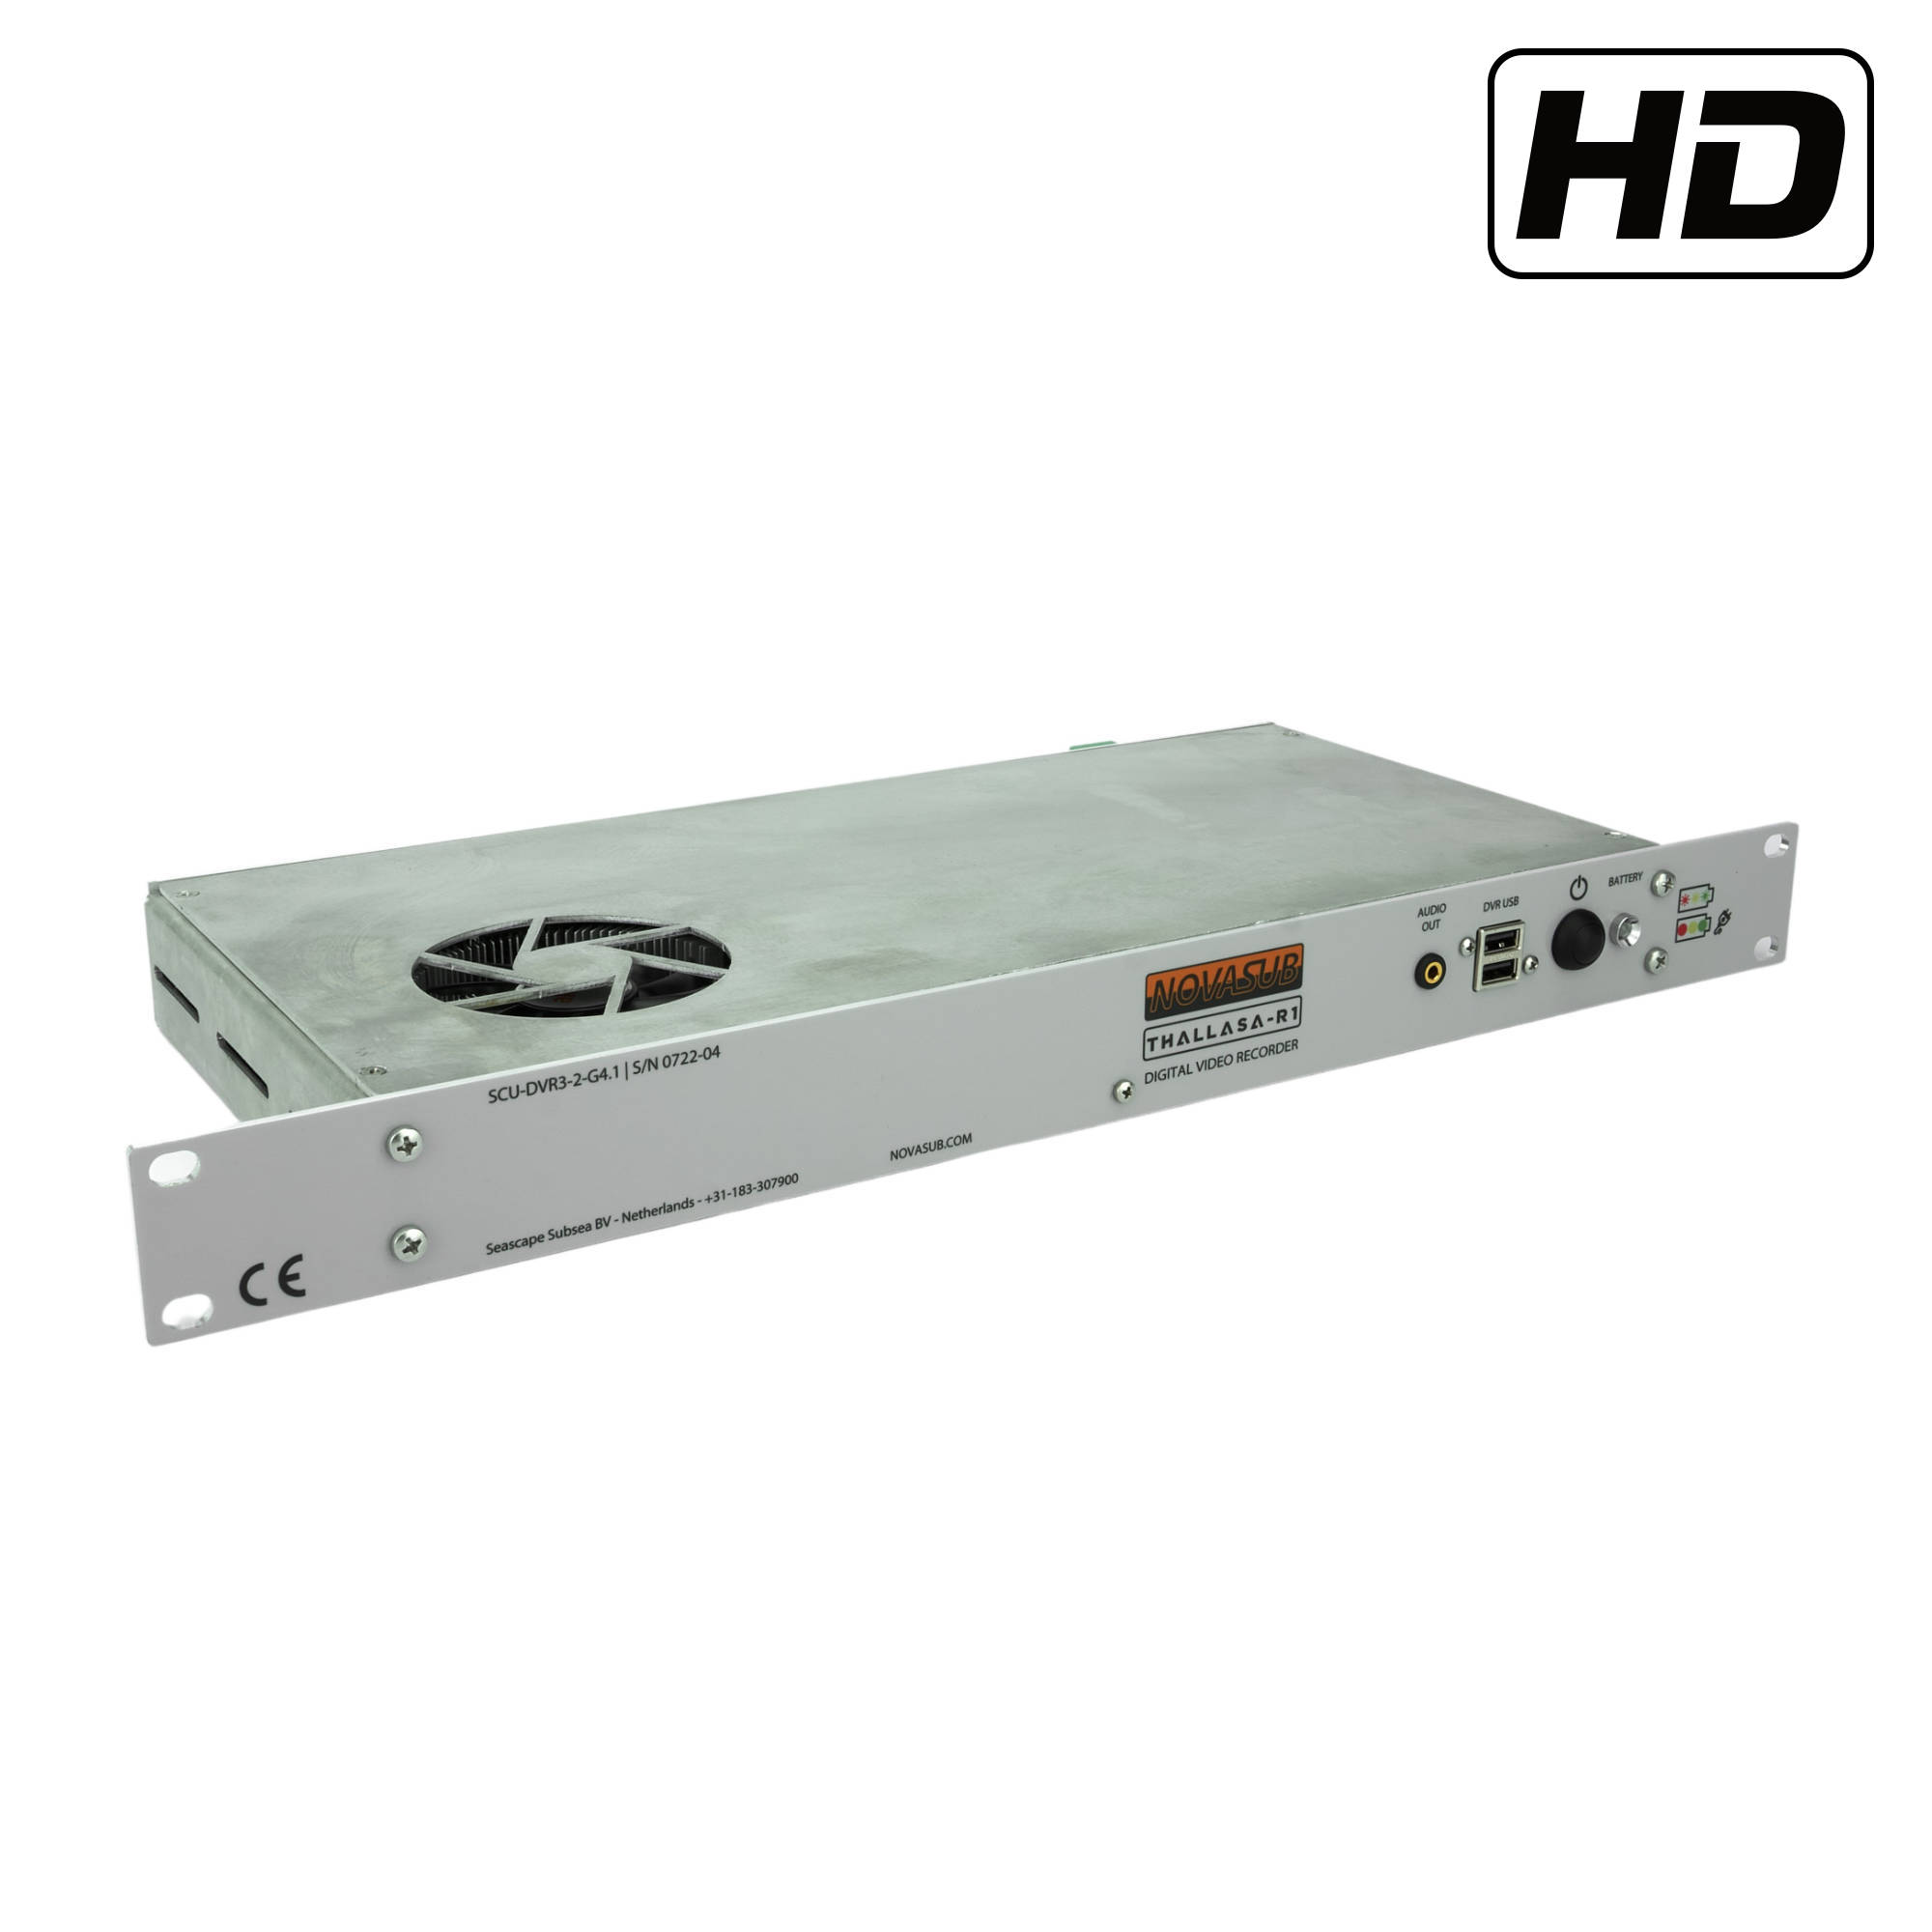 THALLASA-R2 - Rackmount HD video recorder MAIN